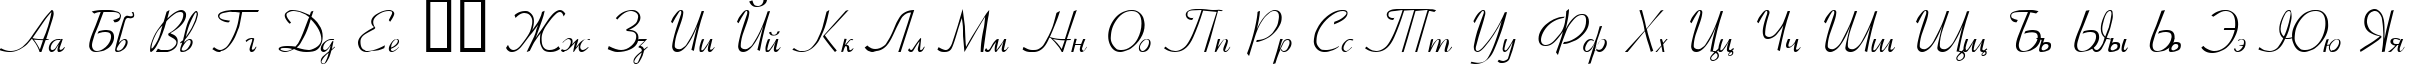 Пример написания русского алфавита шрифтом Ribbon